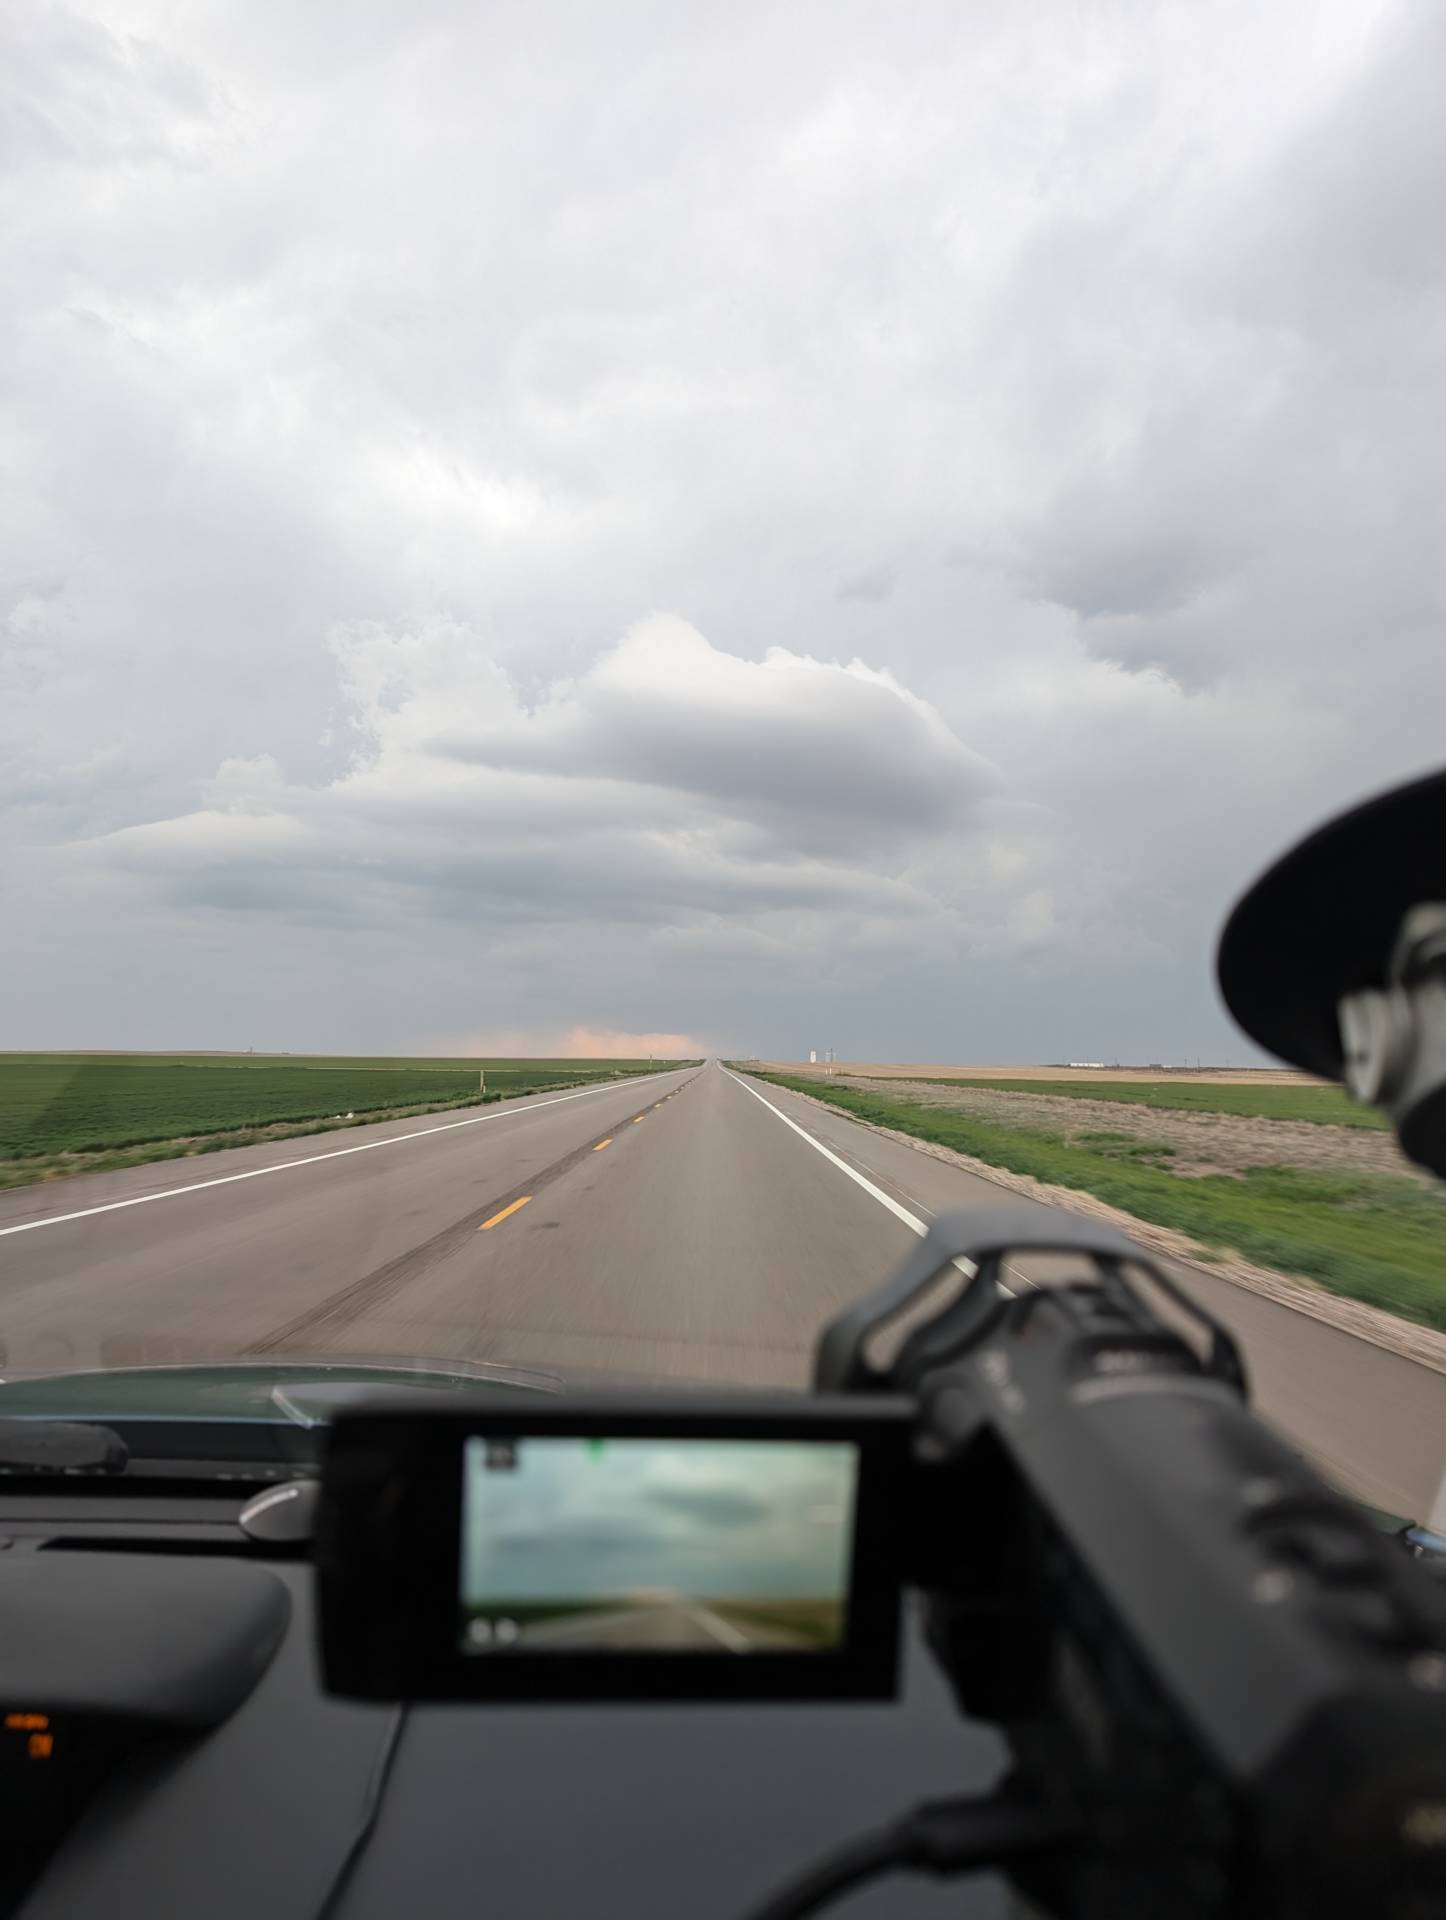 Monitoring storms west of Scott City, Kansas. @NWSDodgeCity #kswx